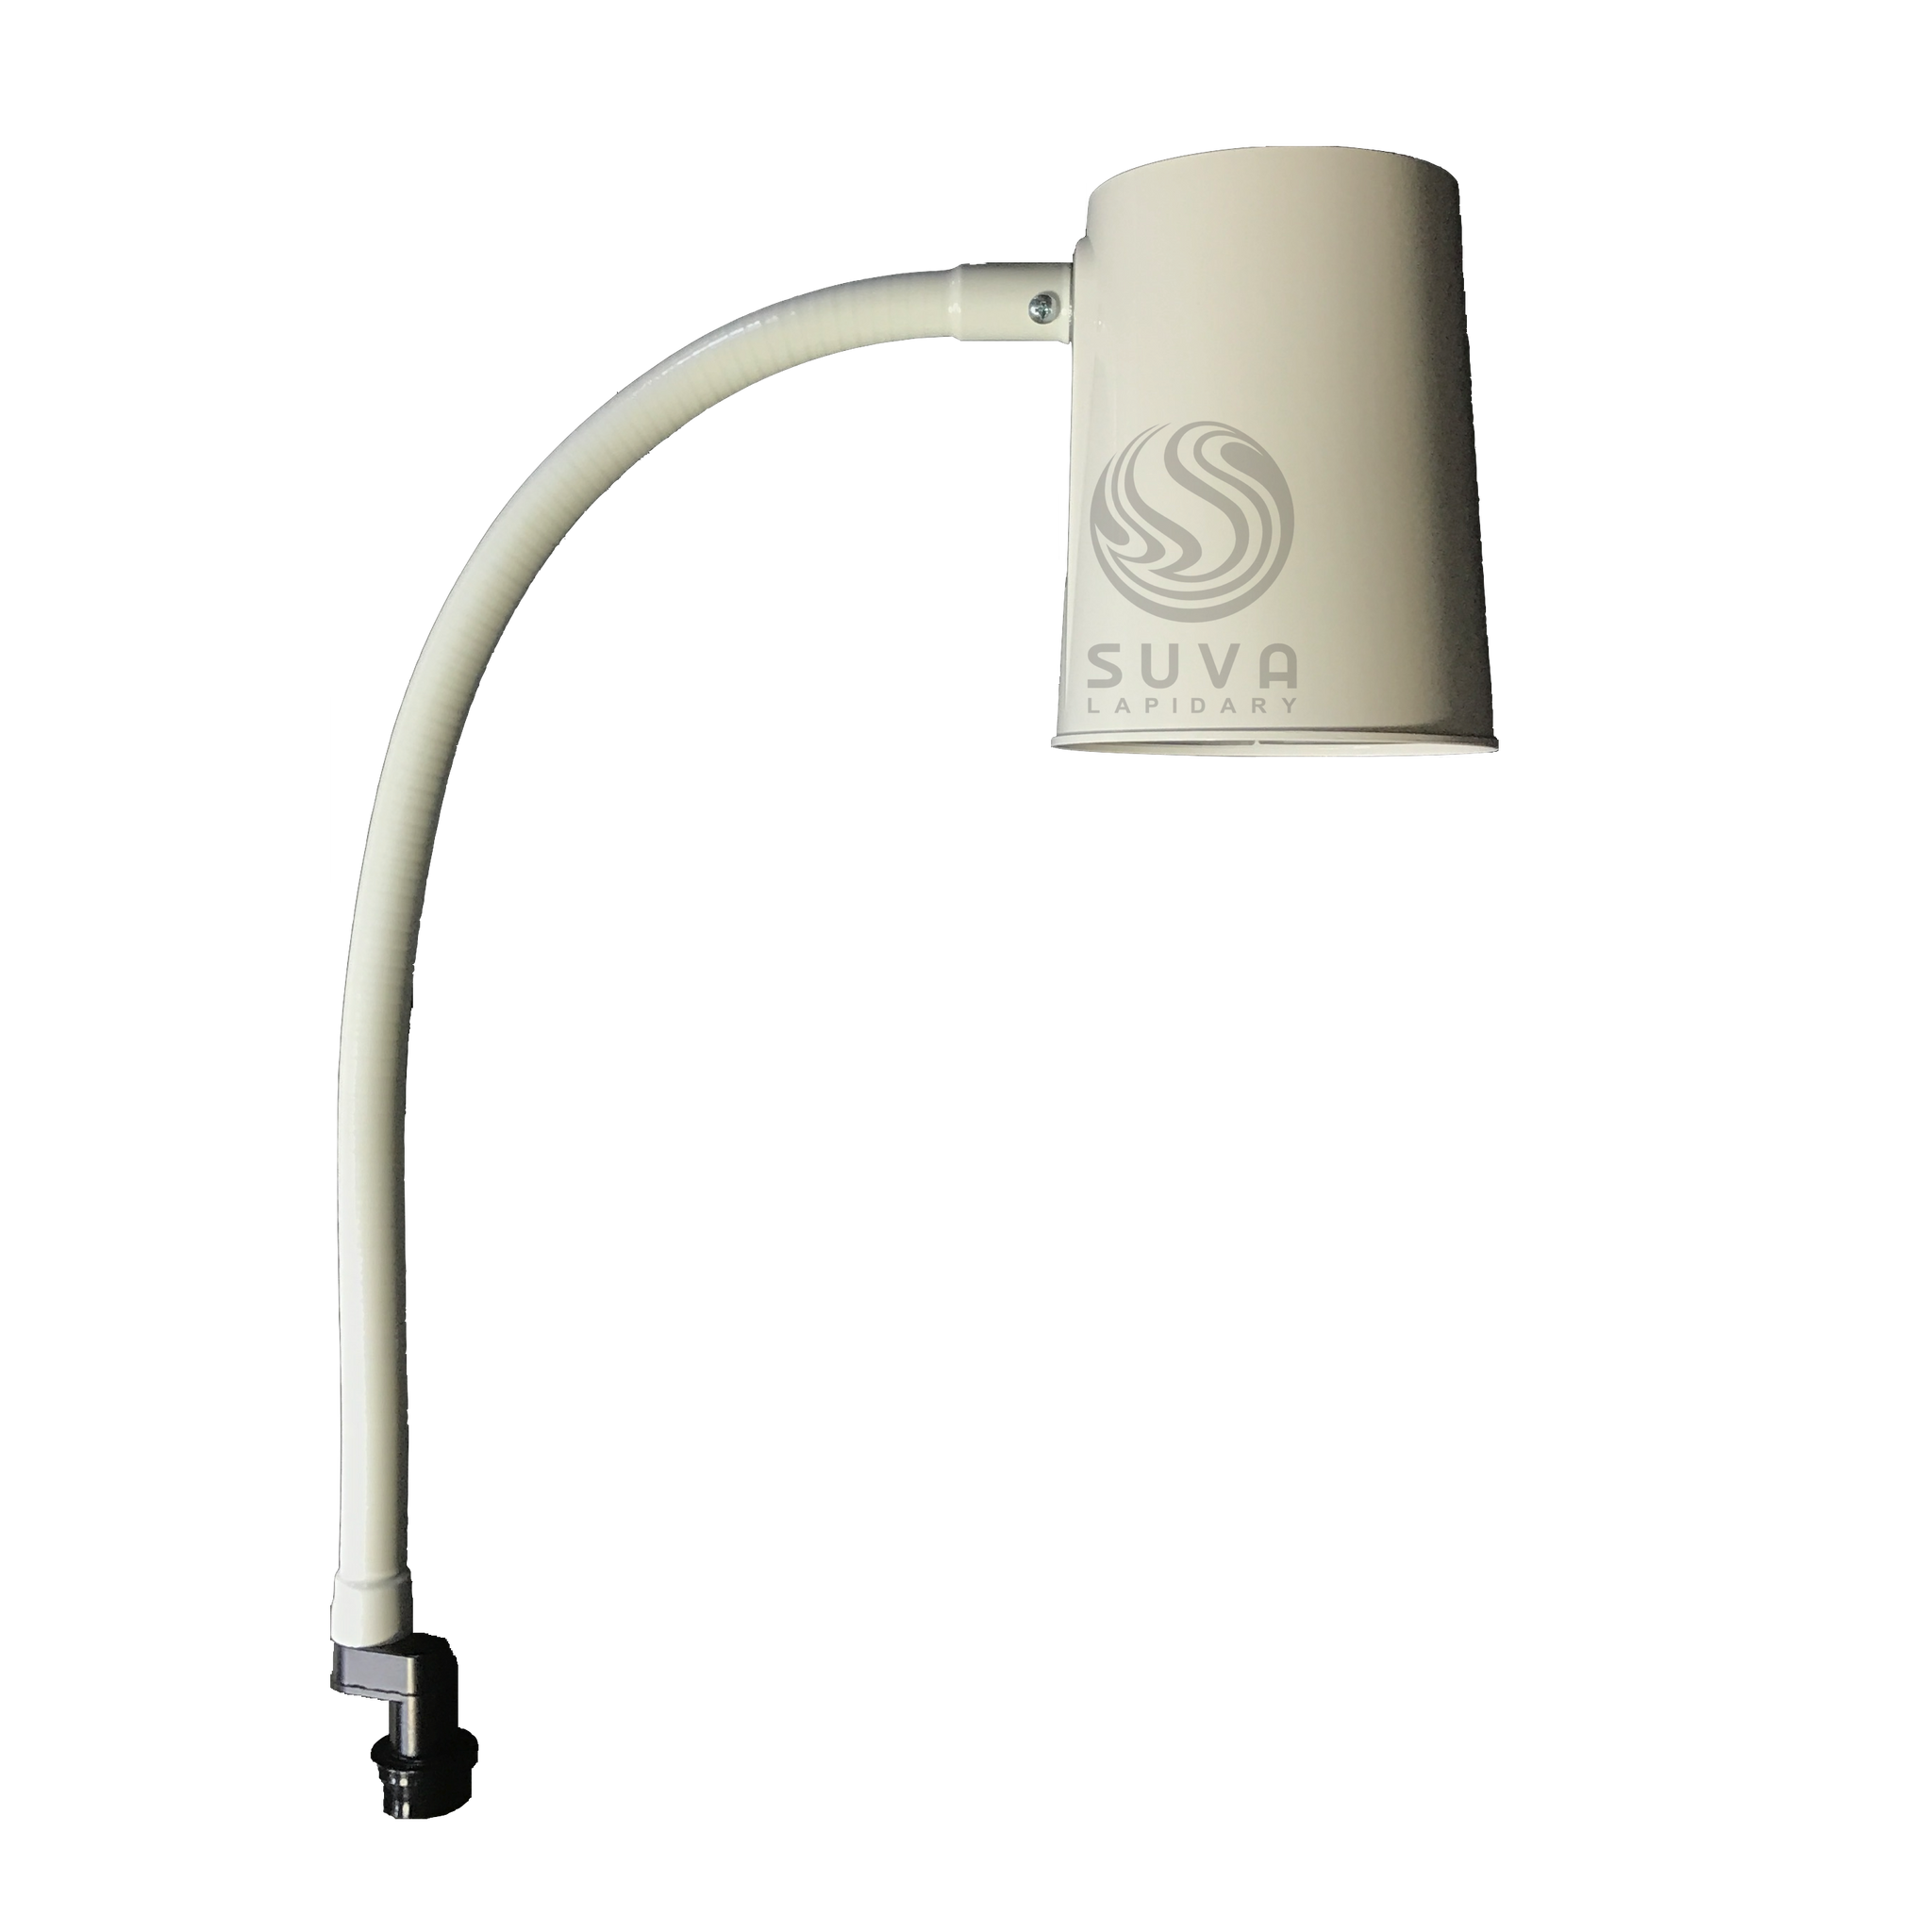 Photo of Diamond Pacific Moffatt Flex Stem Lamps 18 inch at SUVA Lapidary 117-0618-G